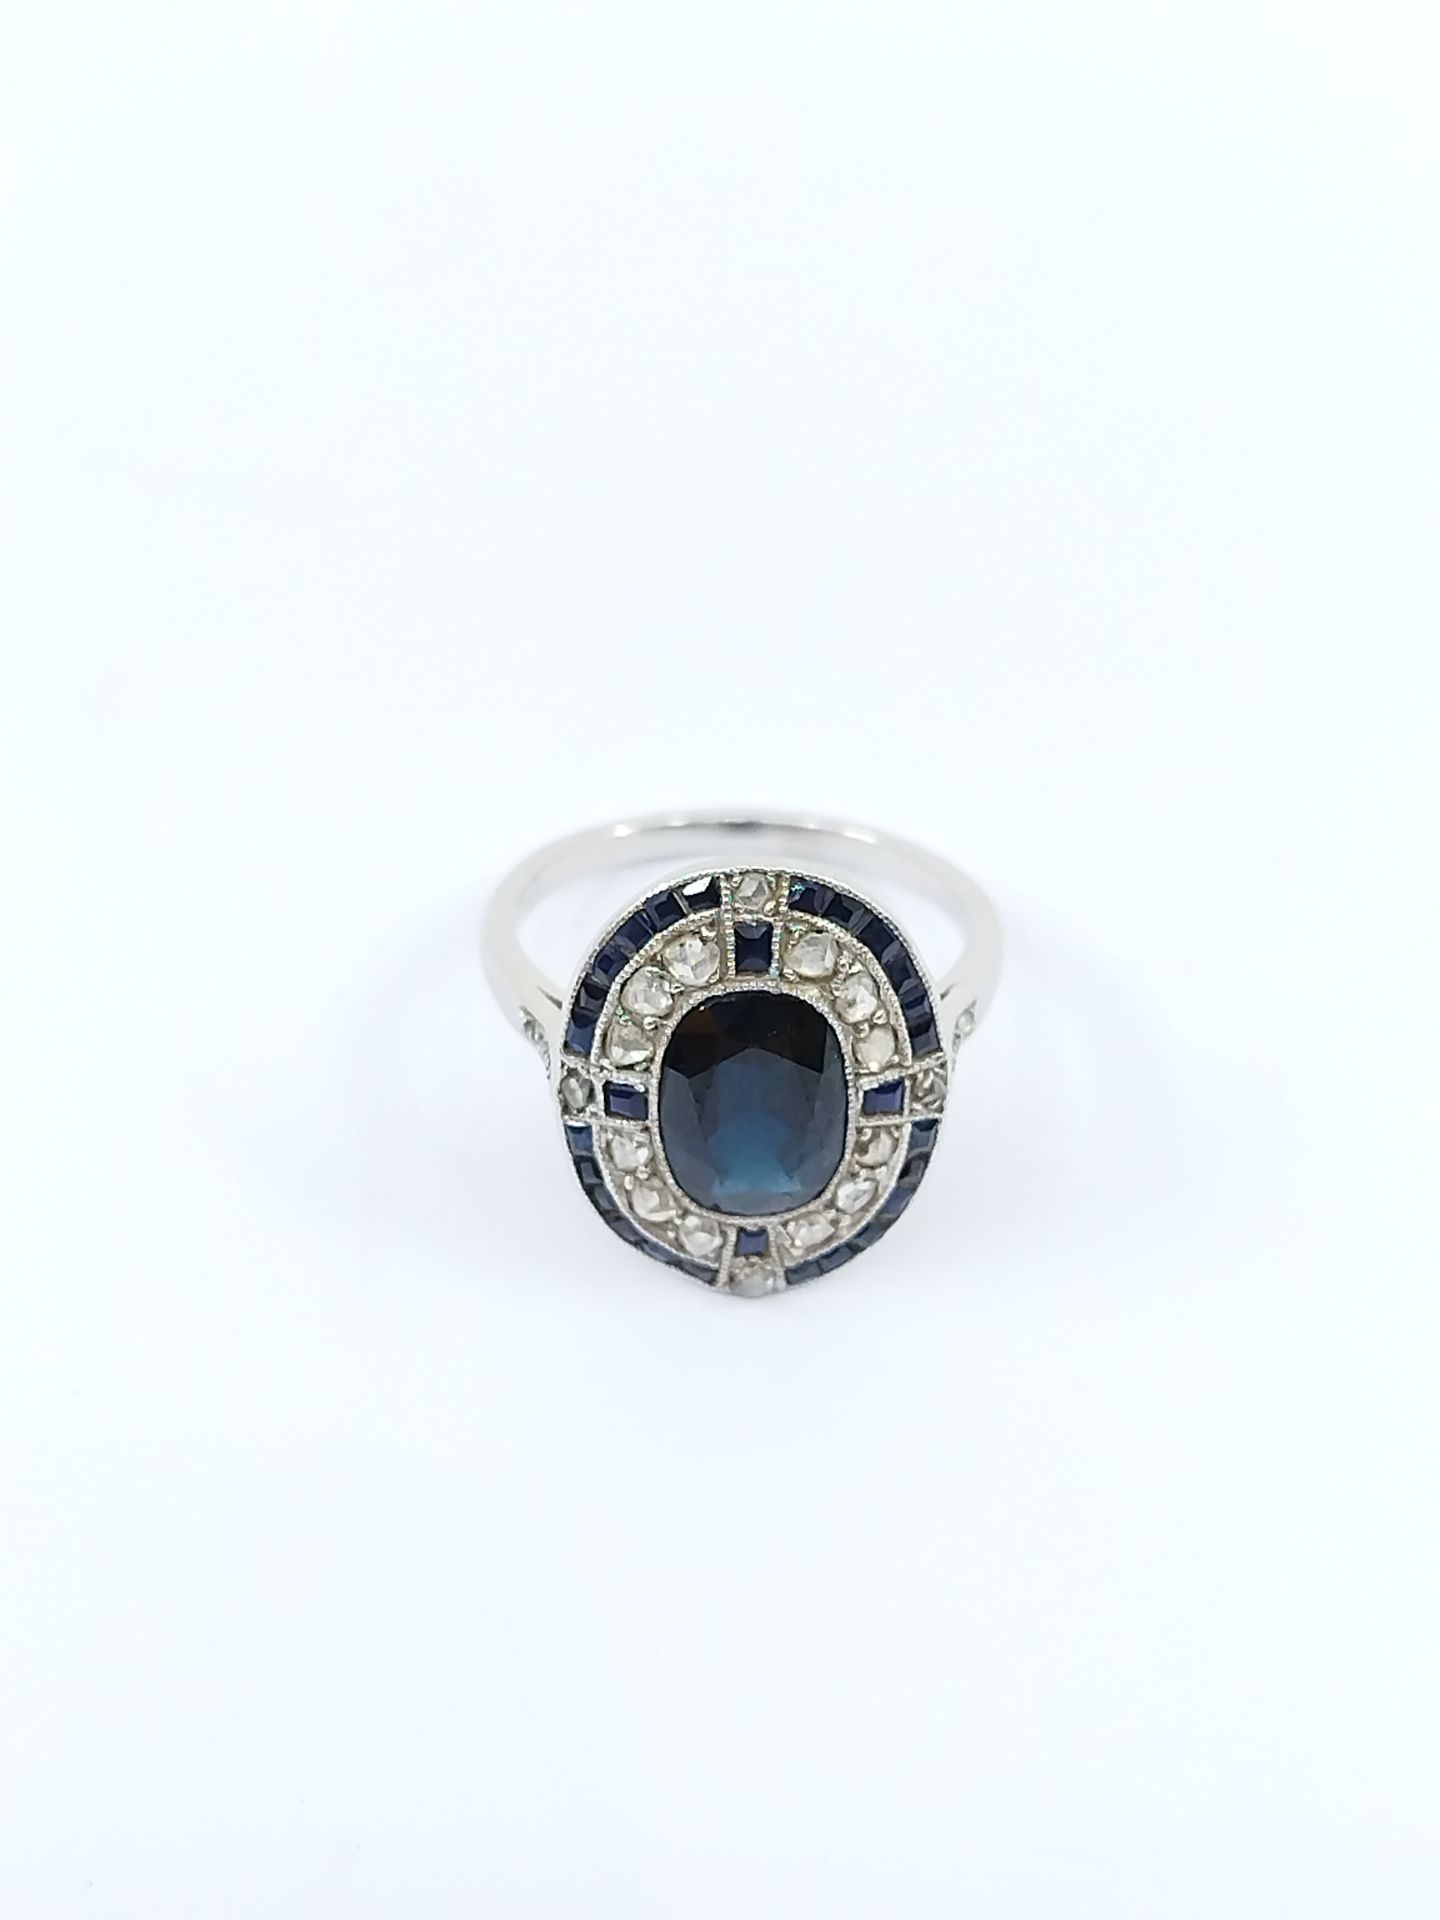 Null 750°白金戒指，镶嵌椭圆形蓝宝石，封闭式镶嵌玫瑰花。 

毛重 : 4,25 g

TDD 52

编号为599